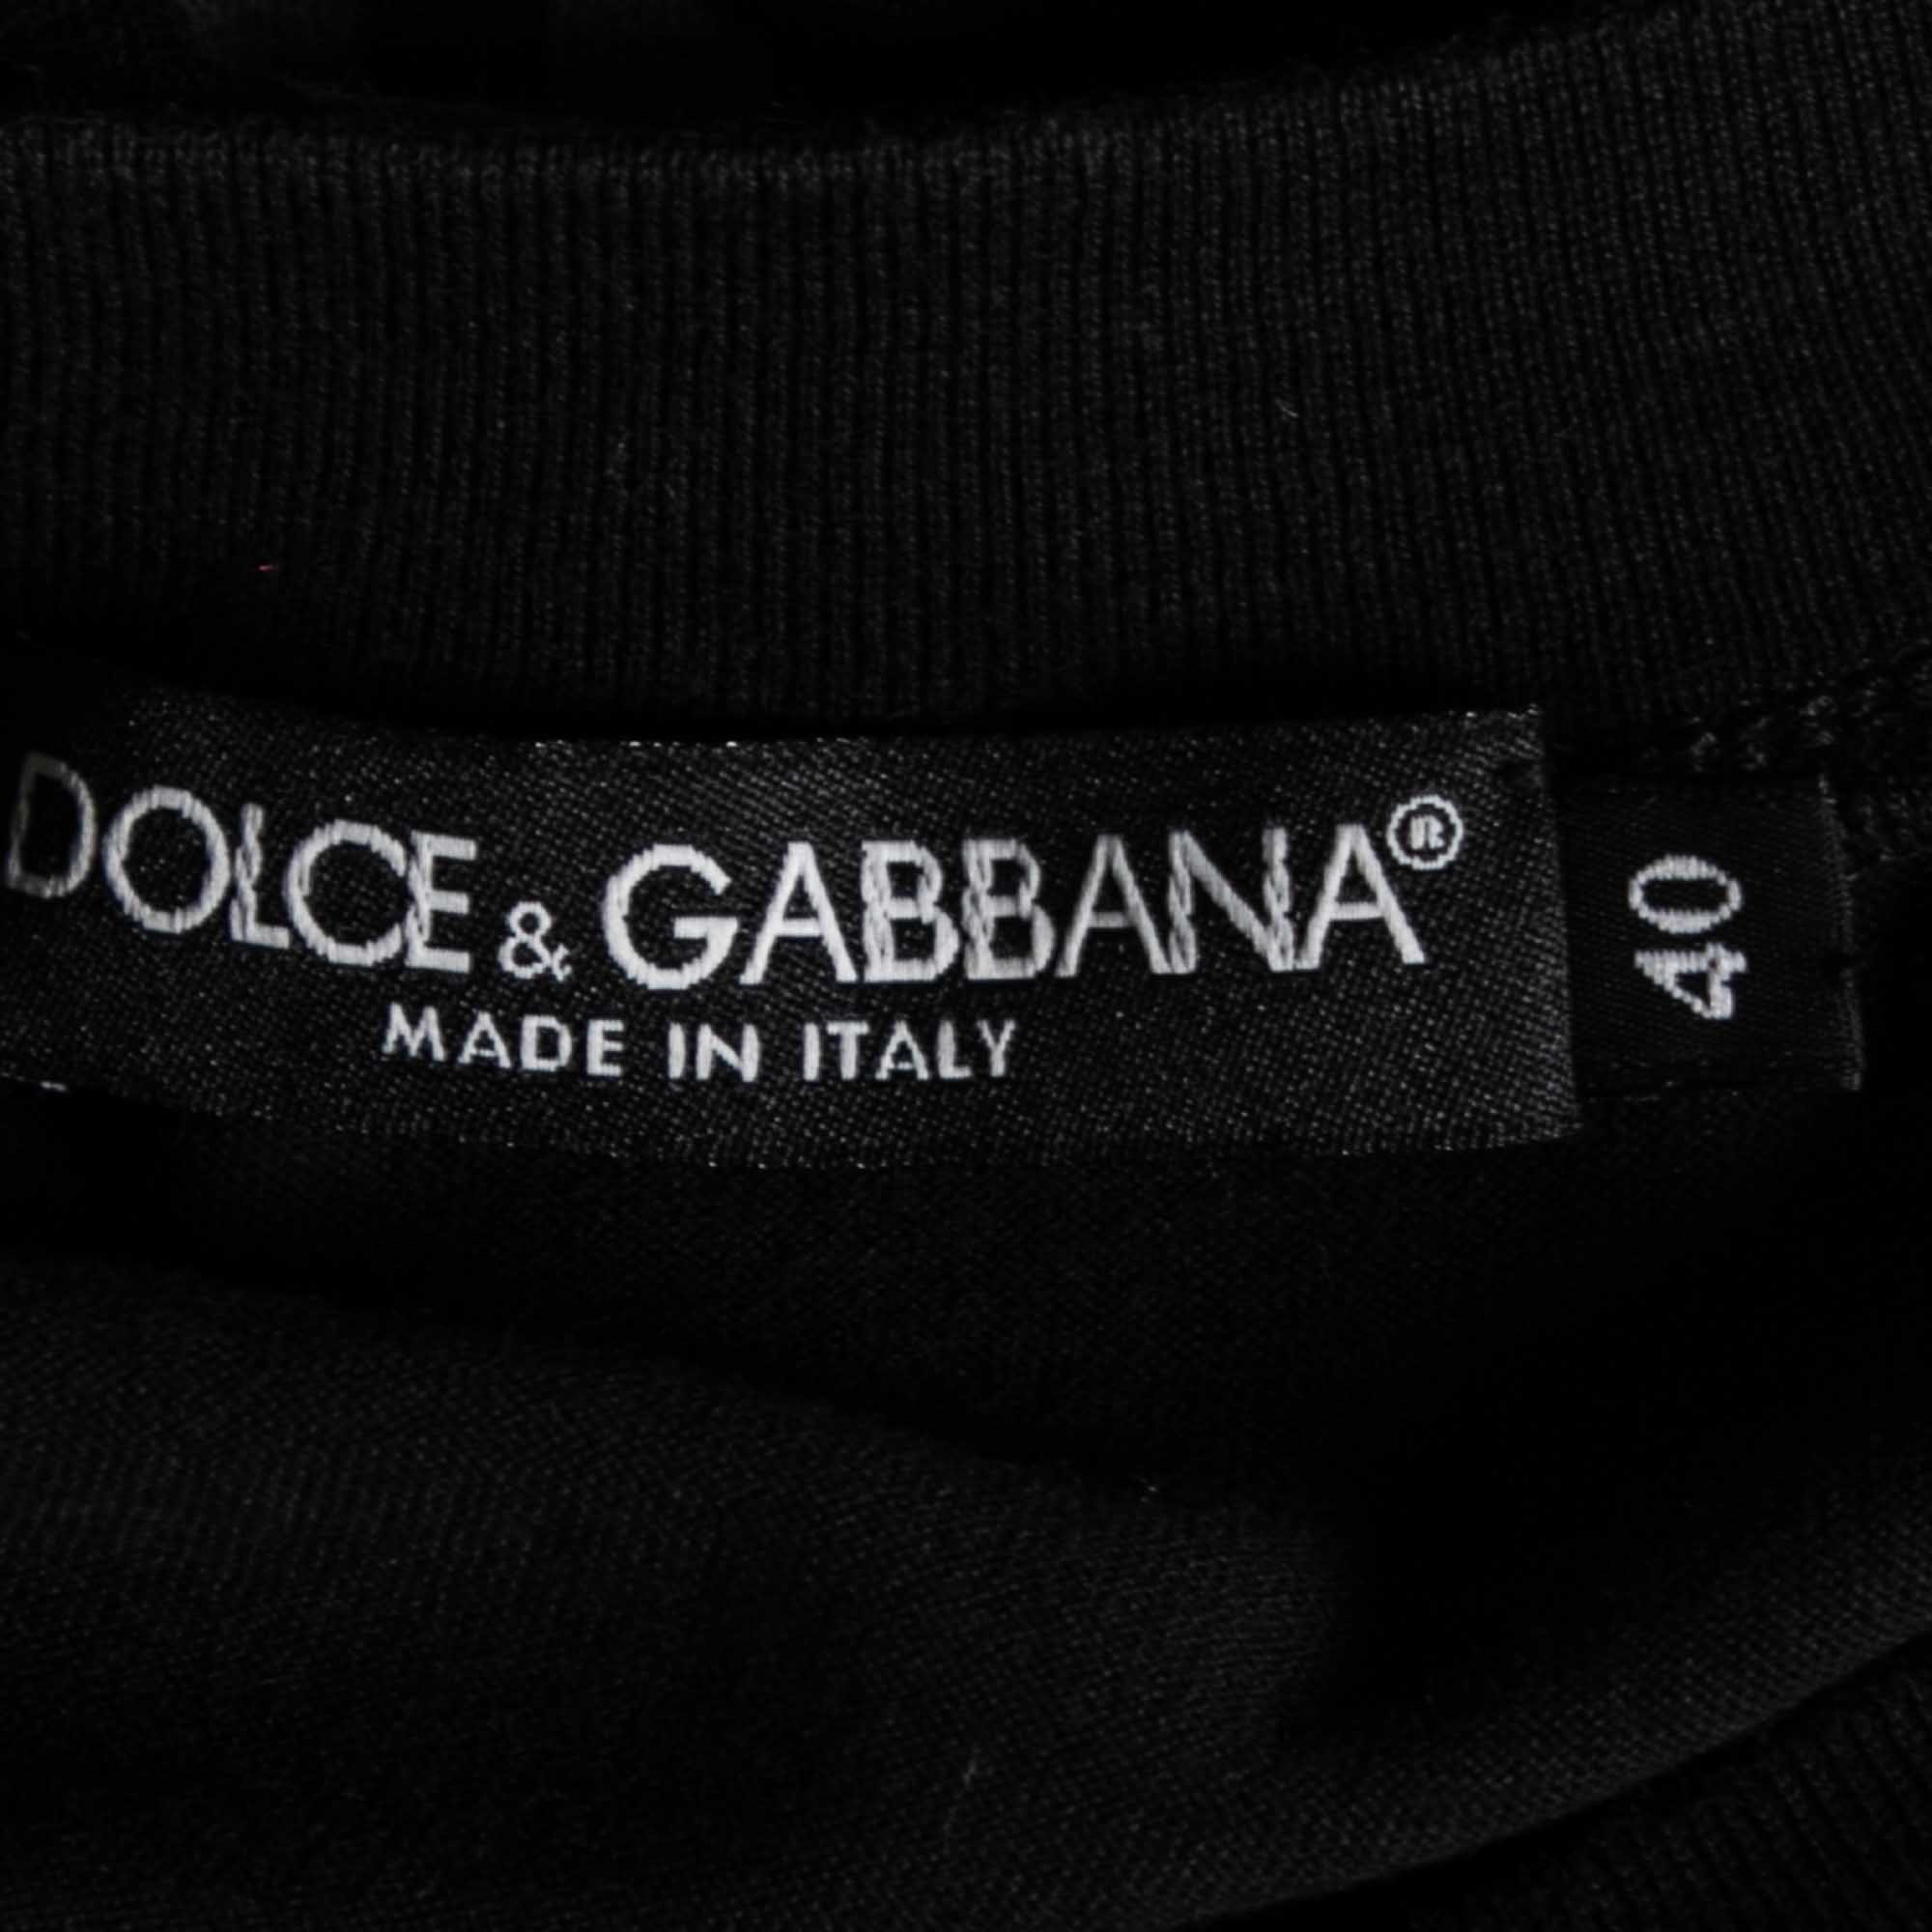 Dolce & Gabbana Black Cotton James Dean Printed T-Shirt S